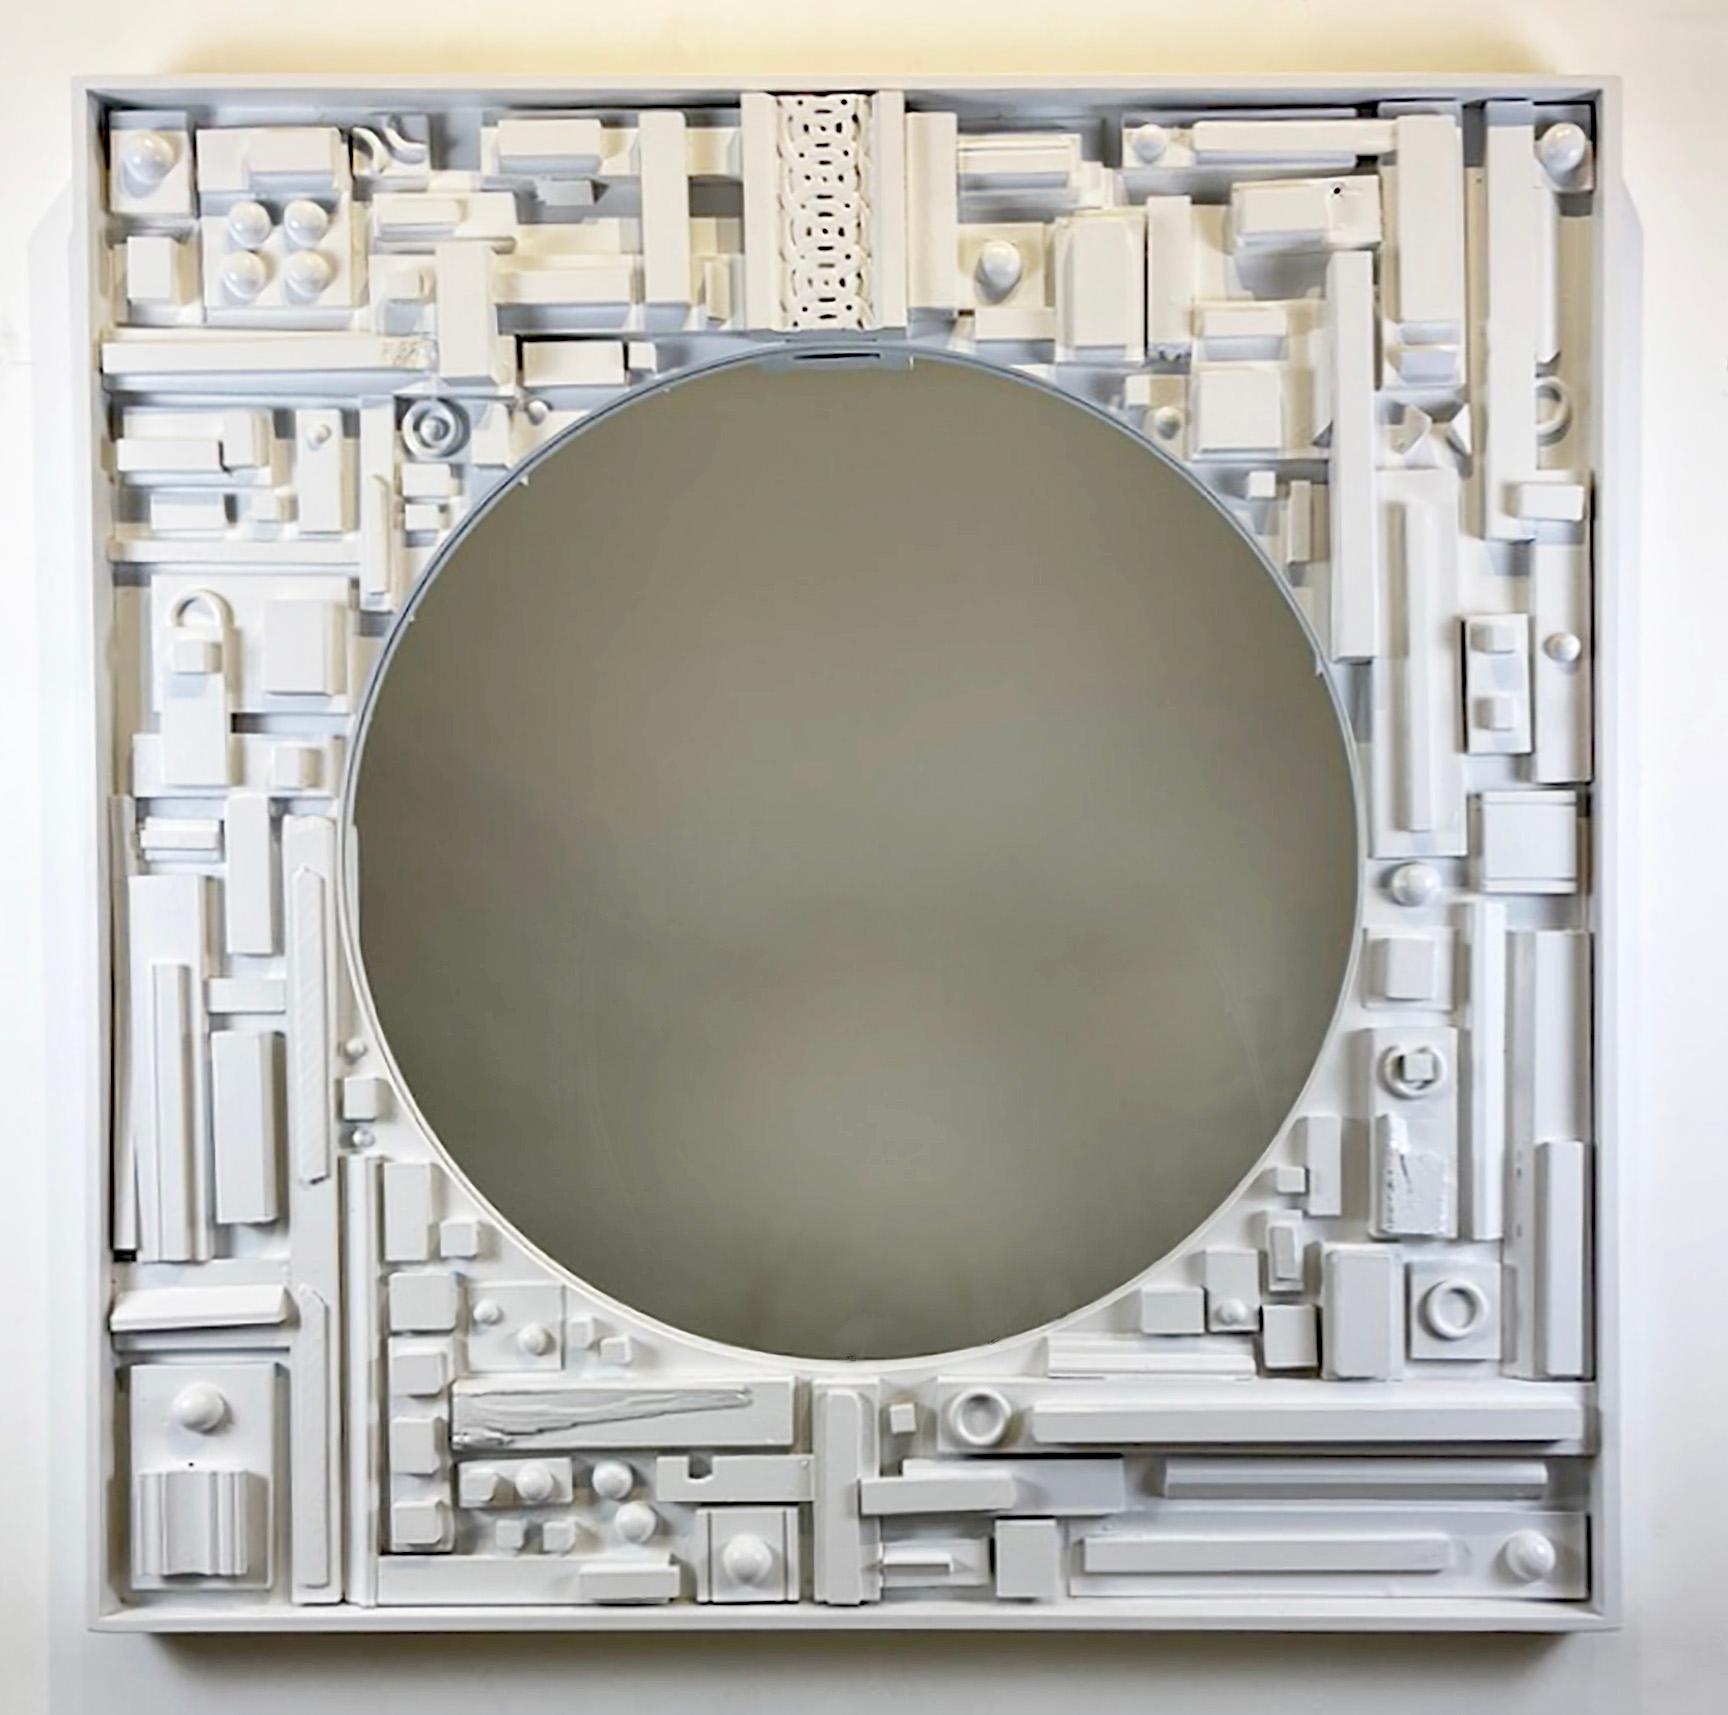 Skyline Mirror by artist Jordan Tabachnik, 2024
Mix media, scrap wood, new wood, paint, glass
Sculptural mirror frame

Size